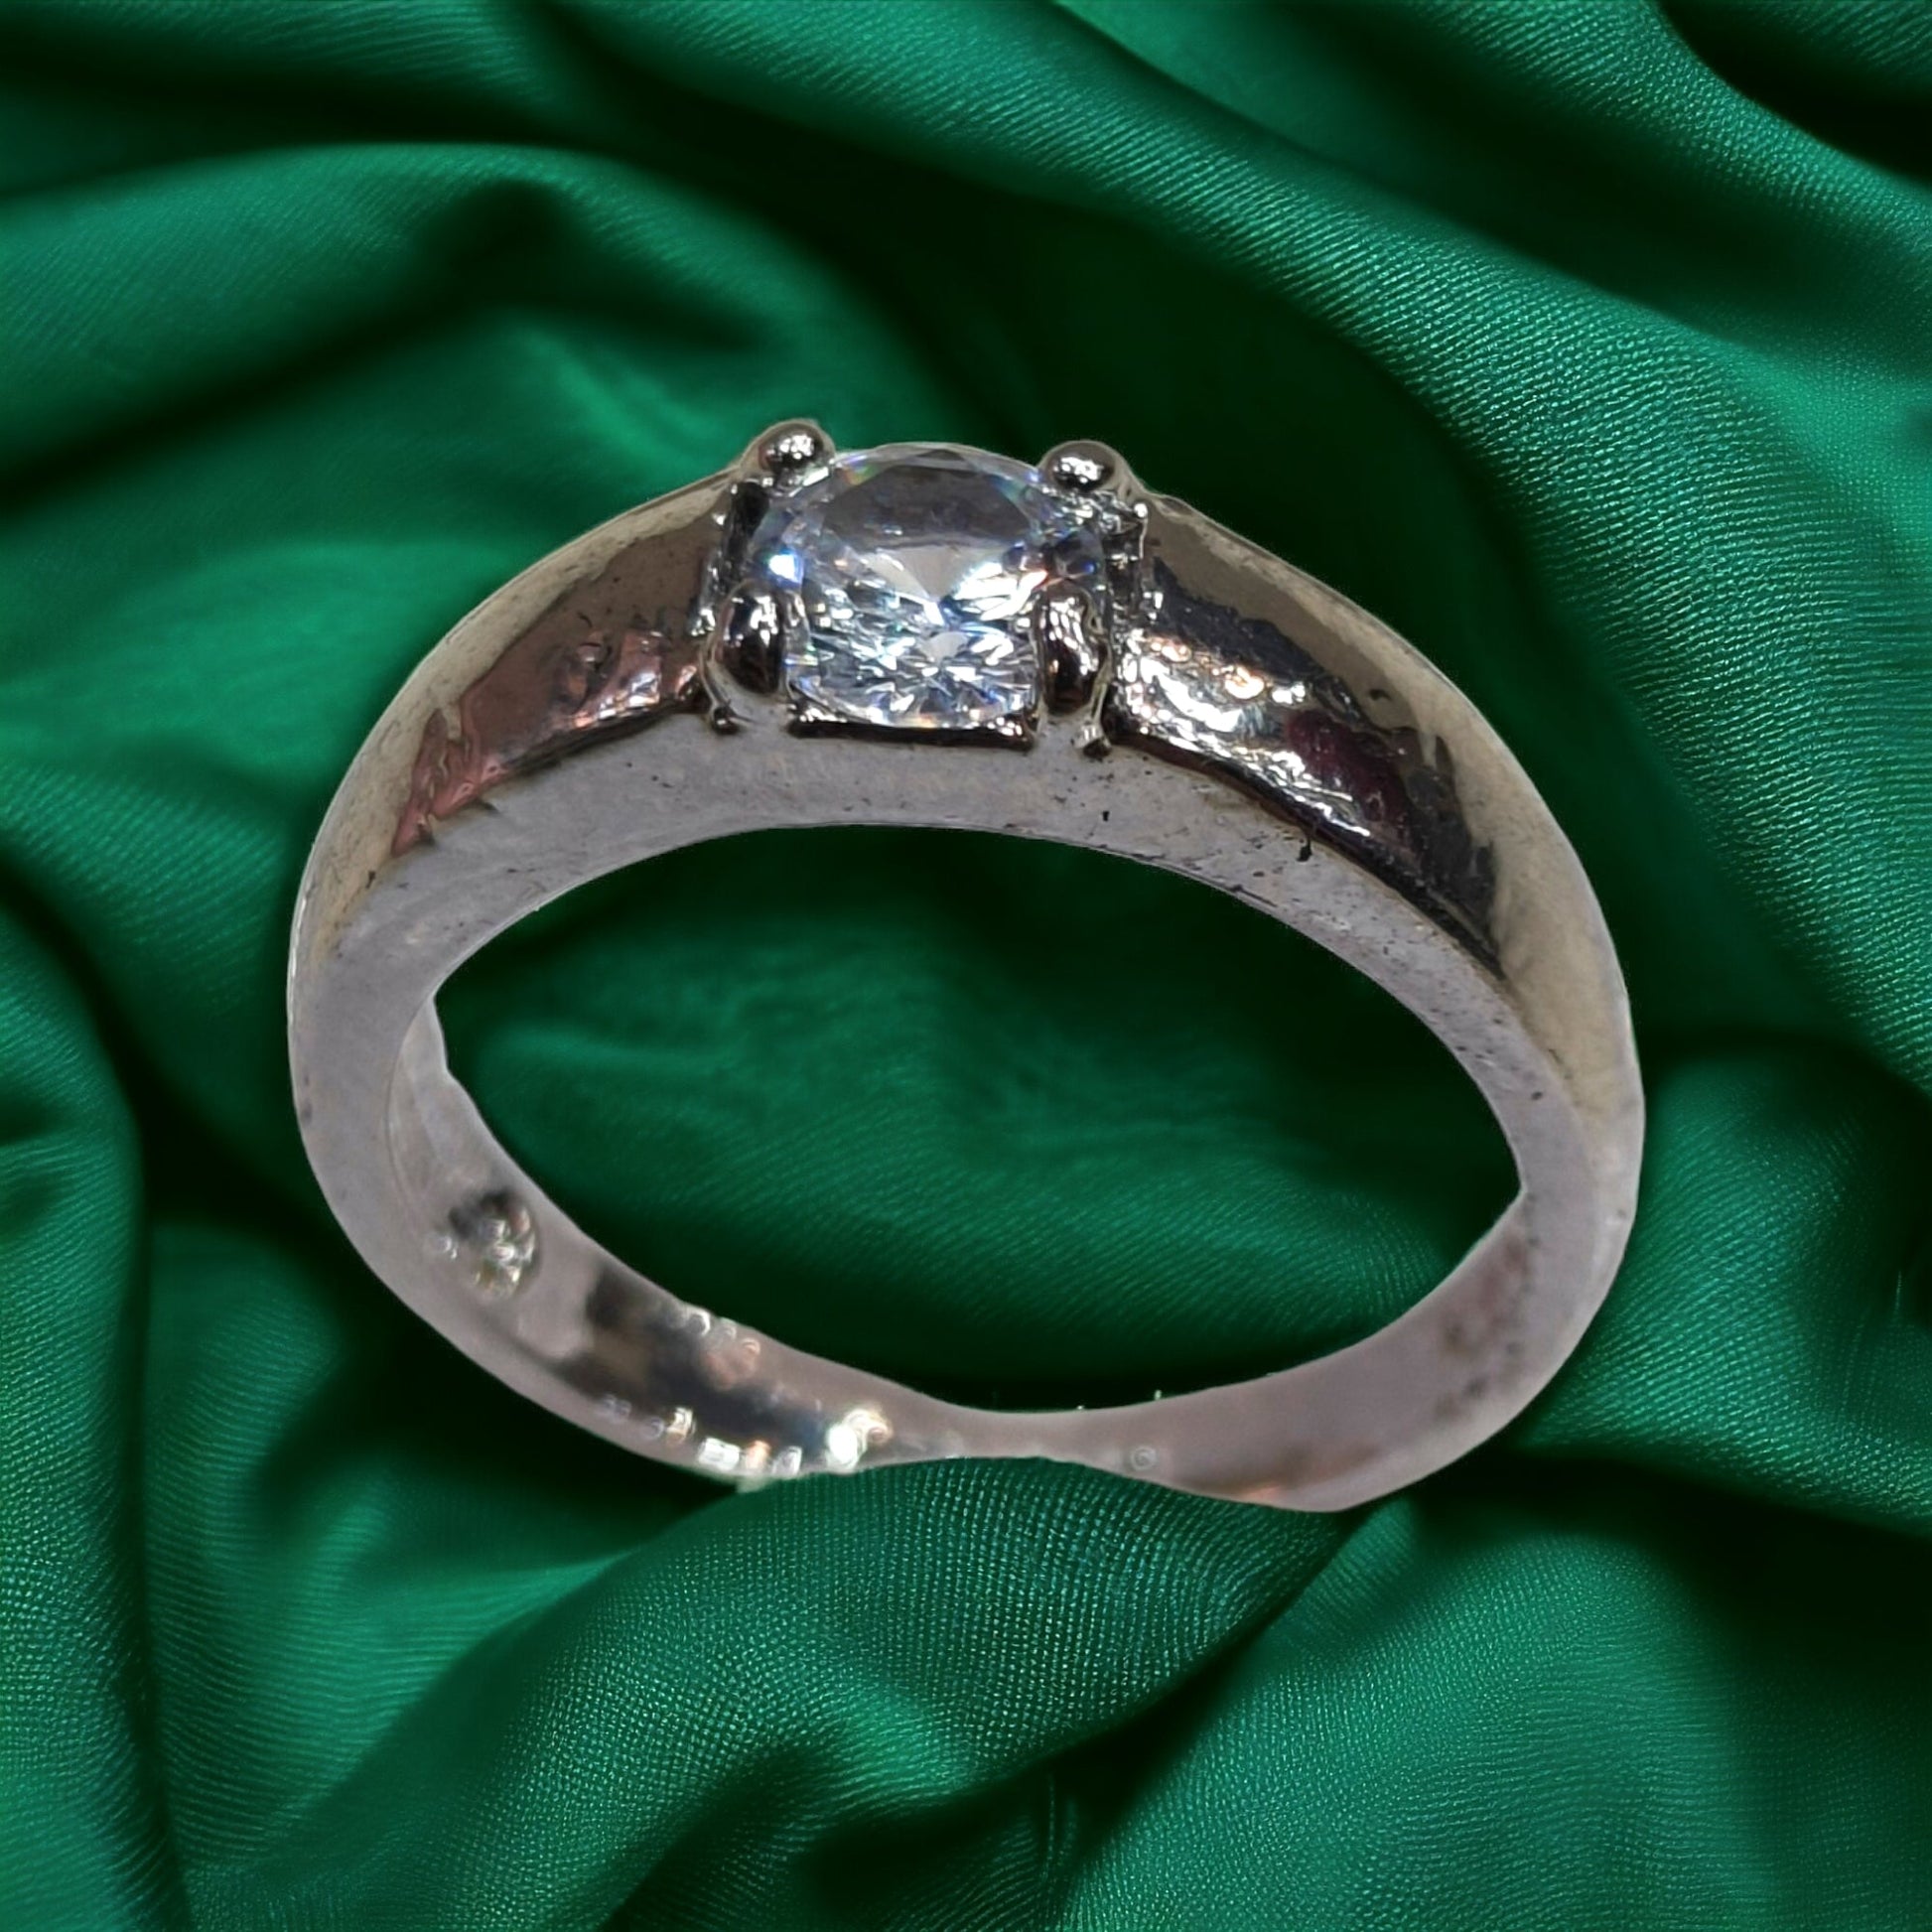 Elegant Imitation Silver Ring with Sparkling Stone-Kalash Cards